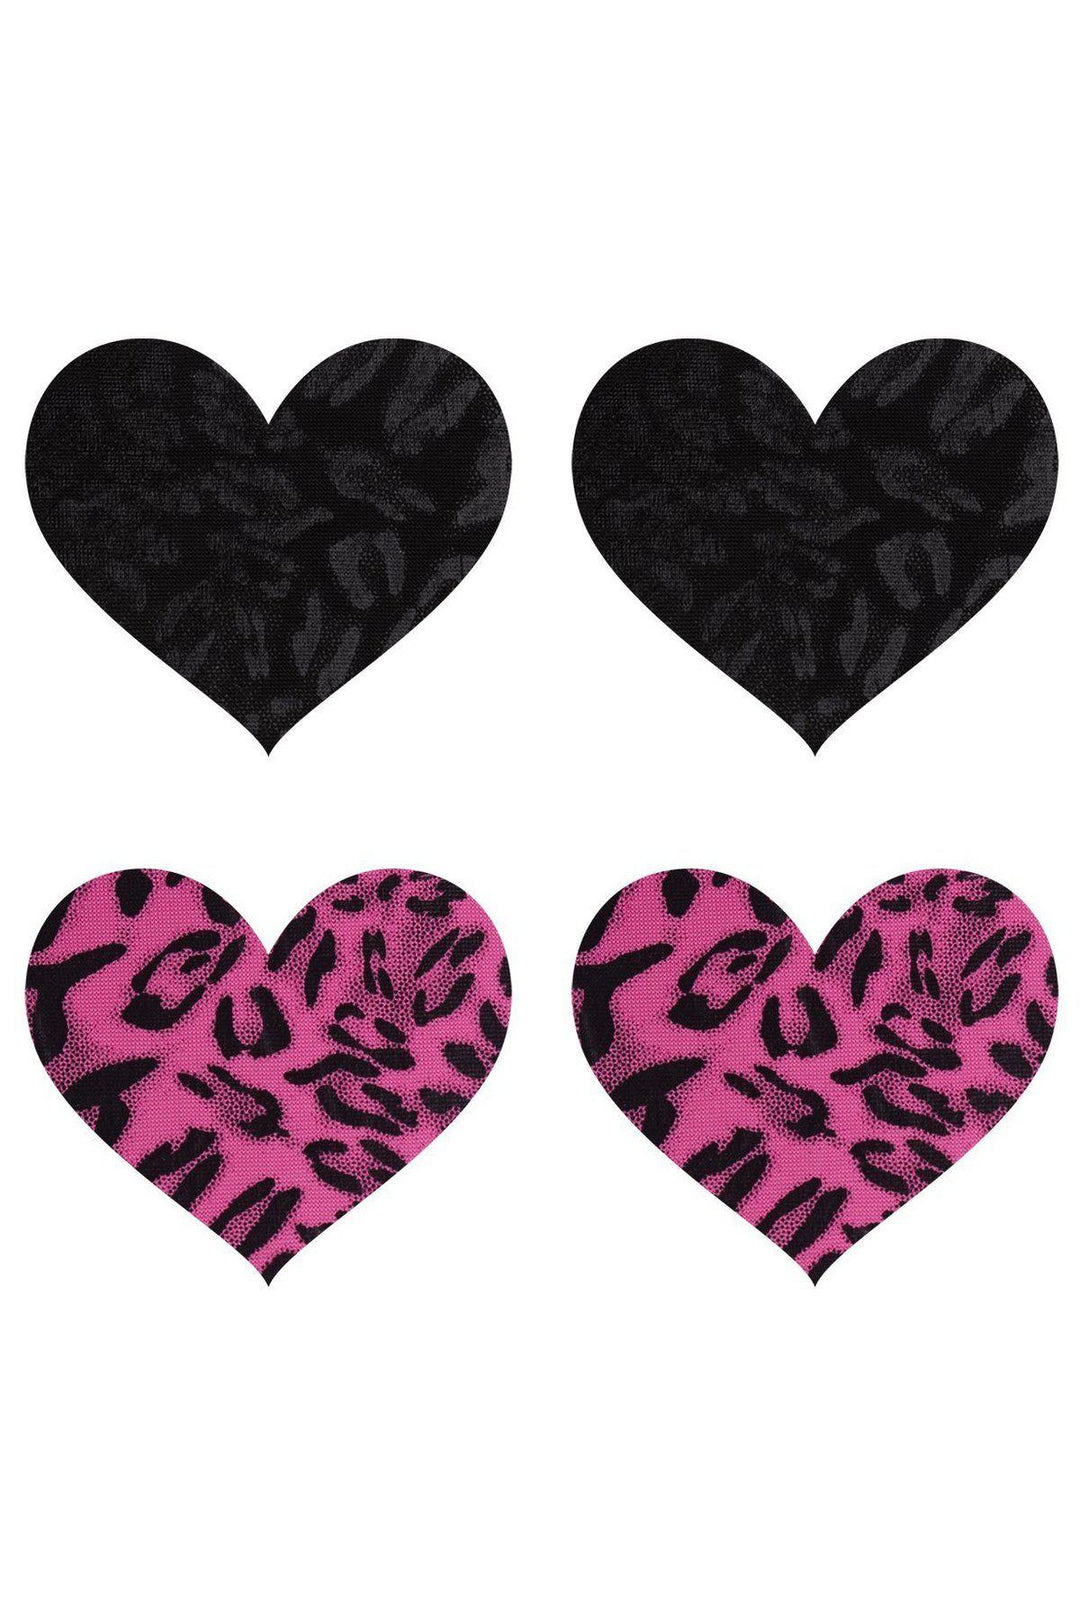 Heart Animal Print Pasties Set-Pasties-Peekaboo Pasties-Pink-O/S-SEXYSHOES.COM